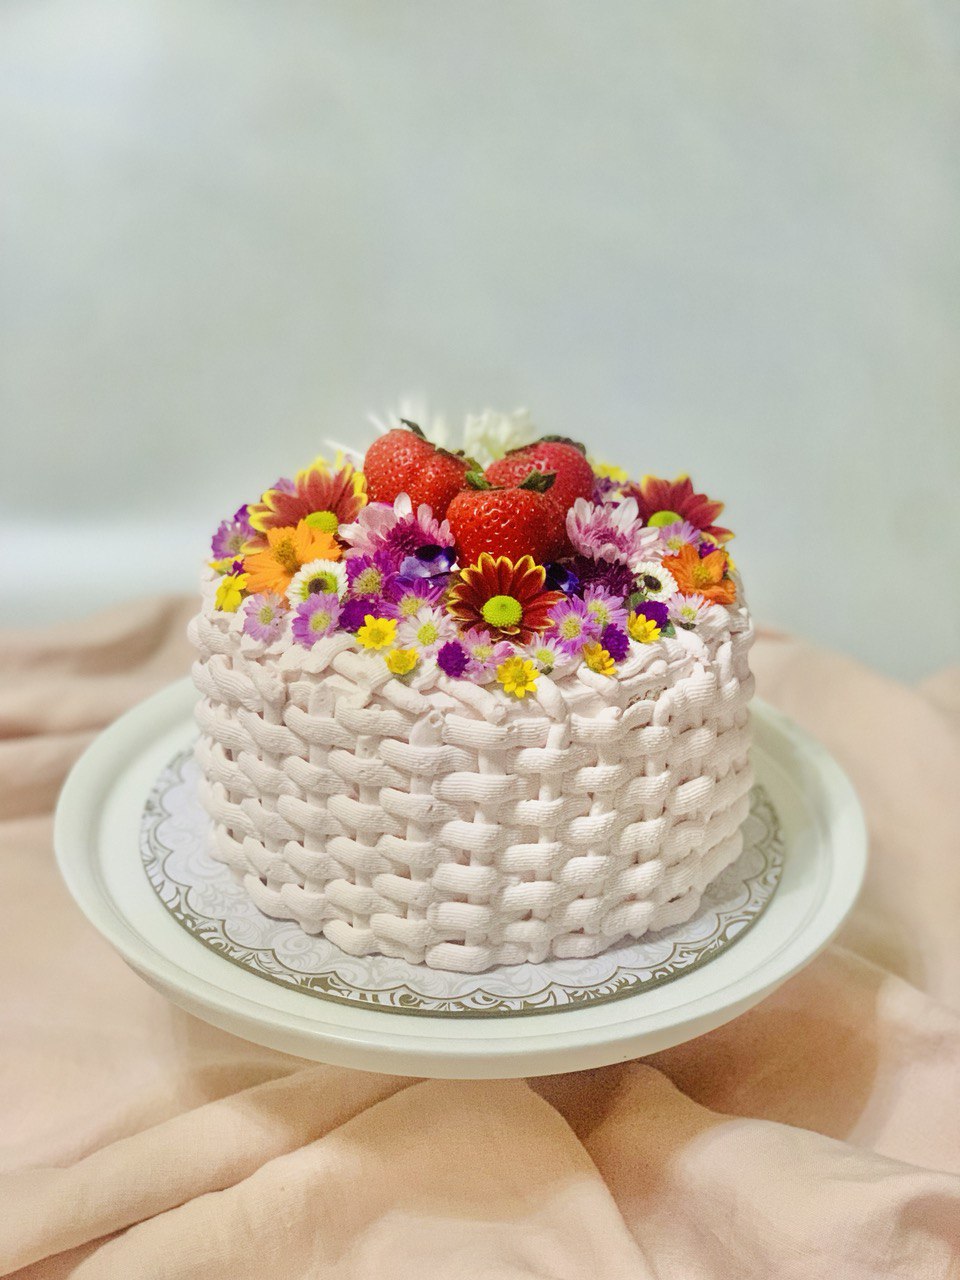 Strawberry Shortcake - Spring Basket Collection